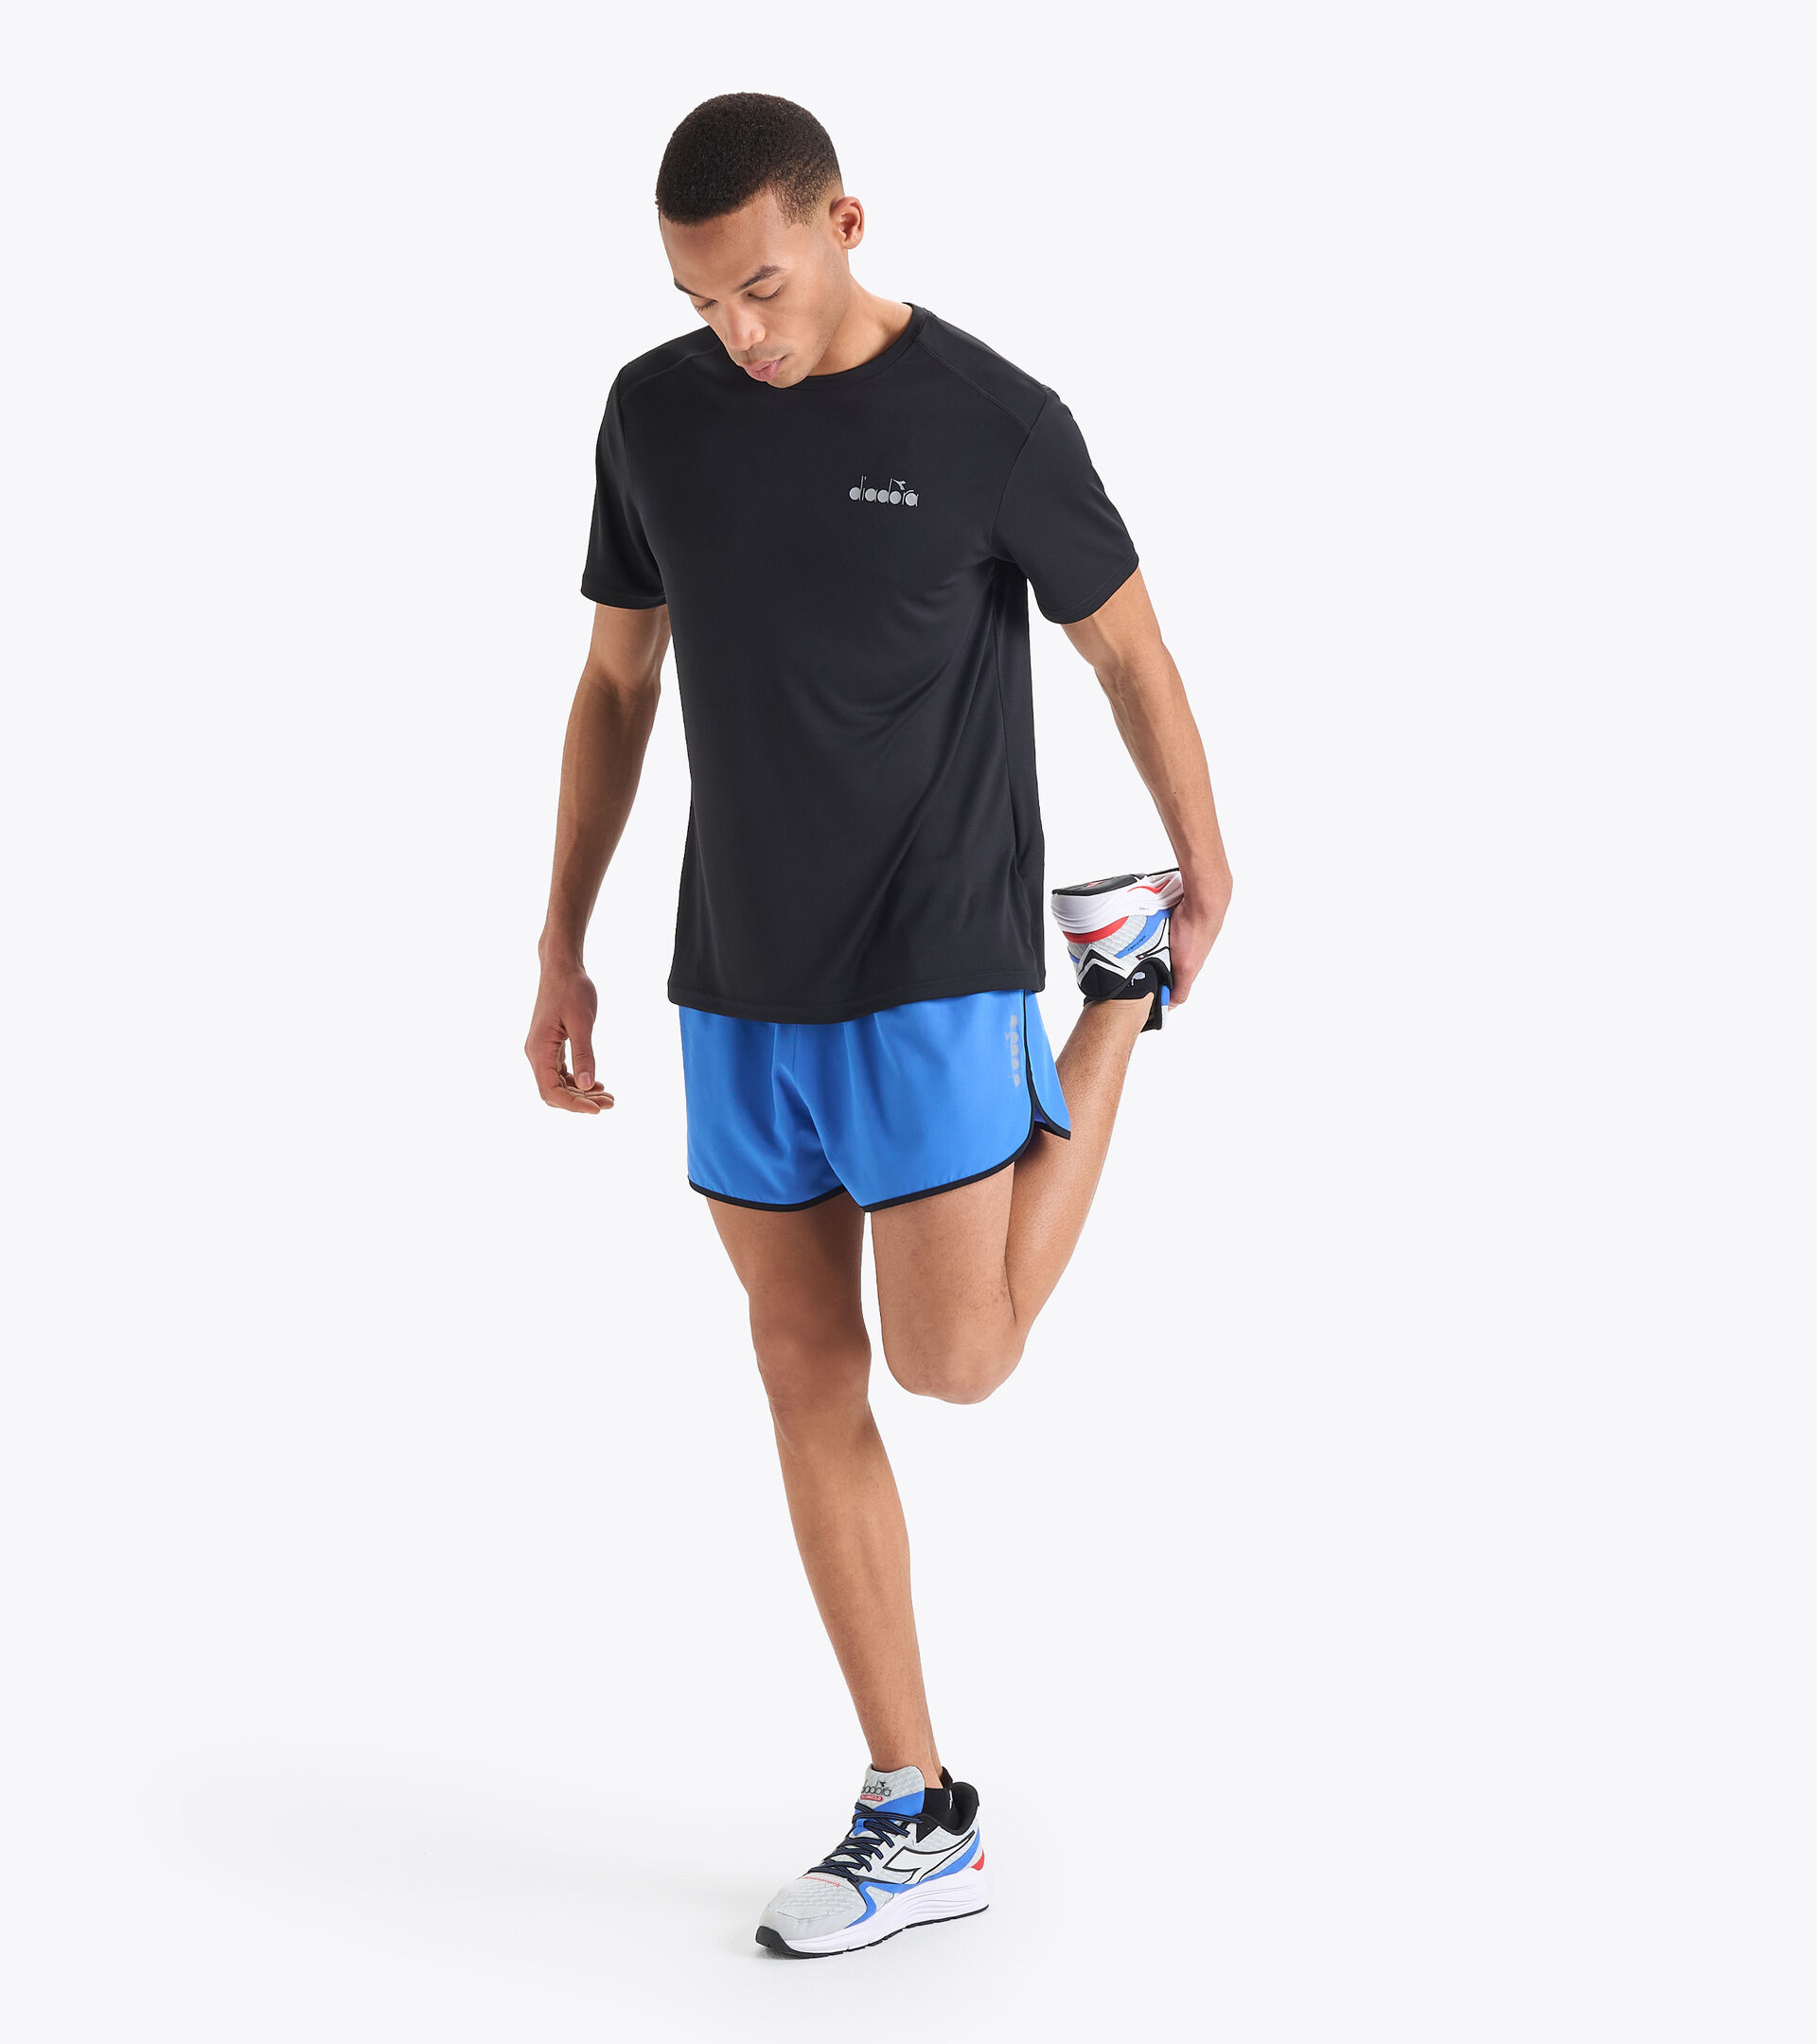 SHORT RUN Running shorts - Men - Diadora Online Store US